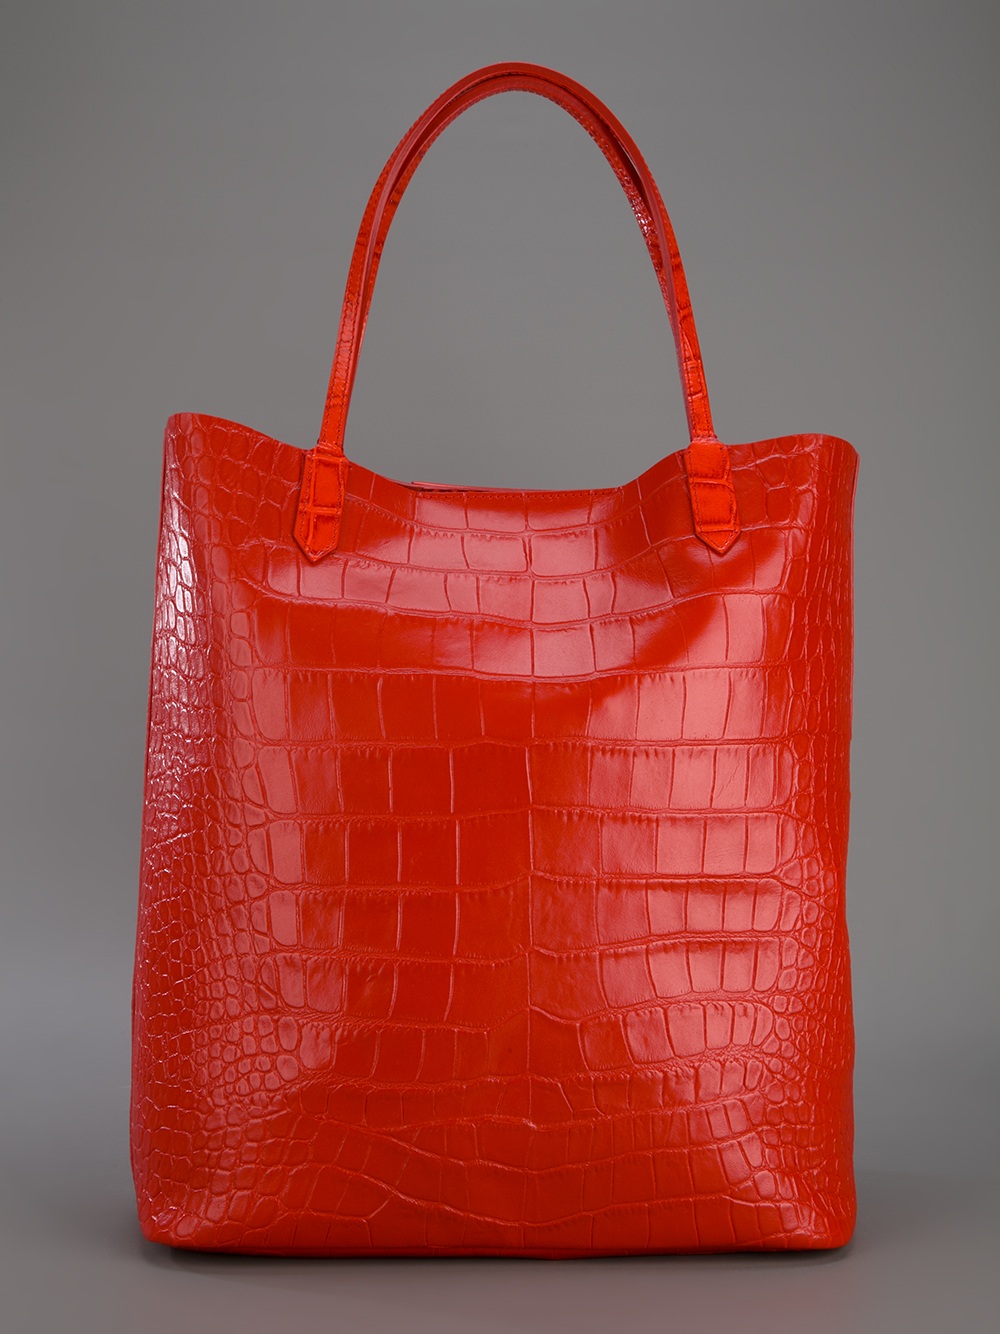 Lyst - Givenchy Antigona Shopper Tote in Red